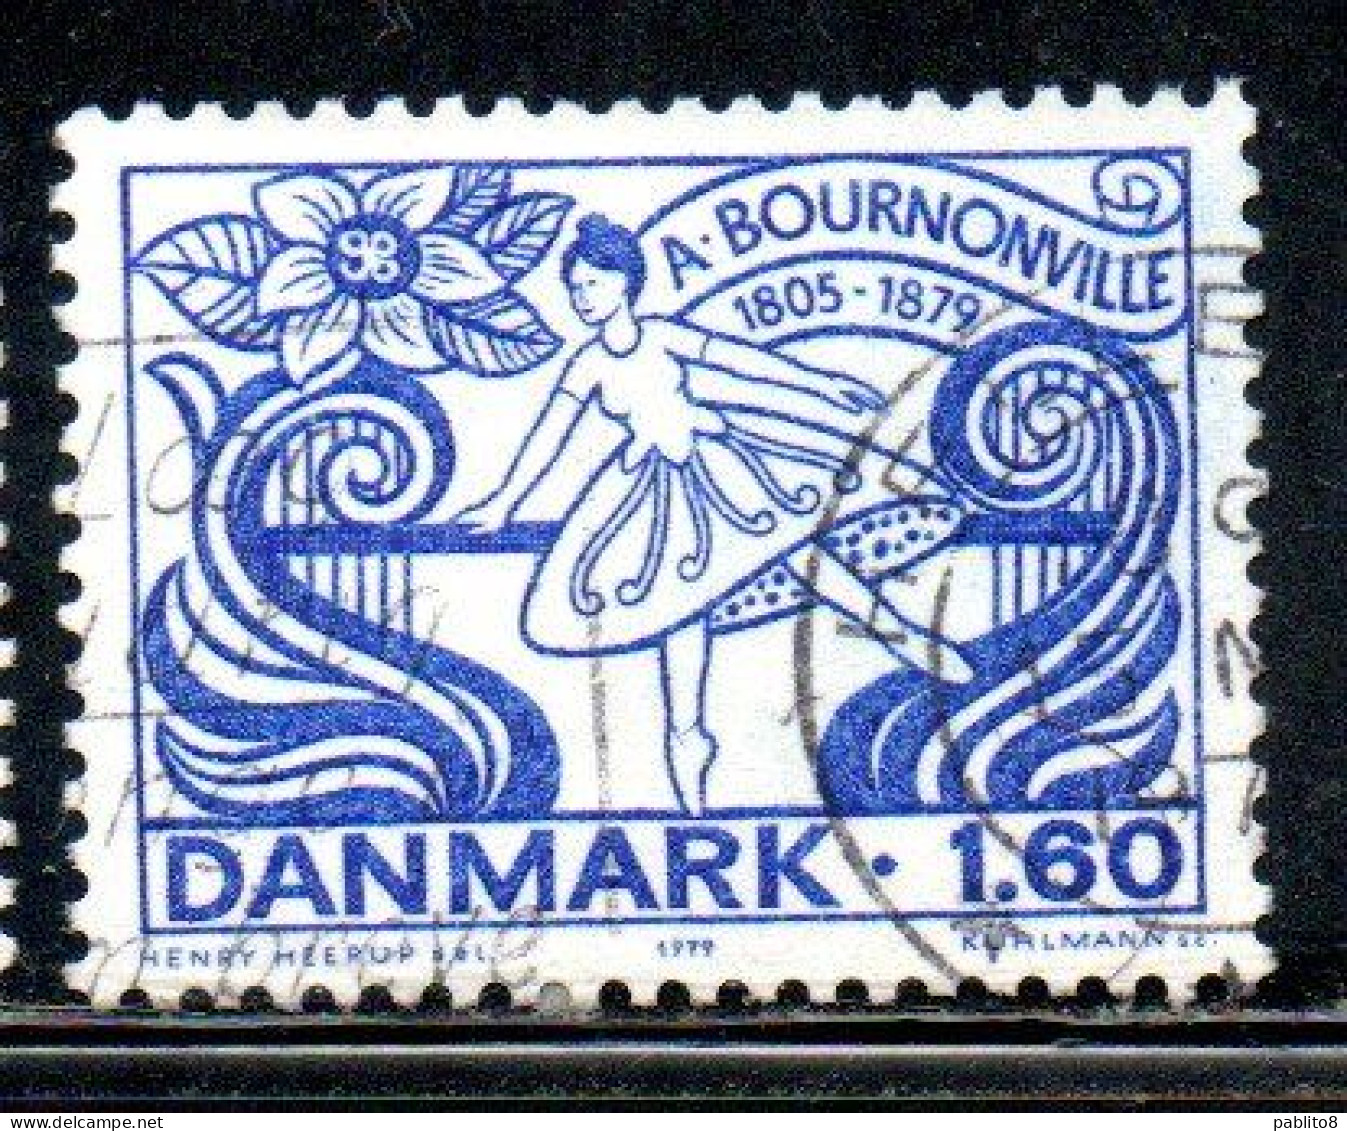 DANEMARK DANMARK DENMARK DANIMARCA 1979 AUGUST BOURNONVILLE BALLET MASTER BALLERINA 1.60k USED USATO OBLITERE' - Used Stamps